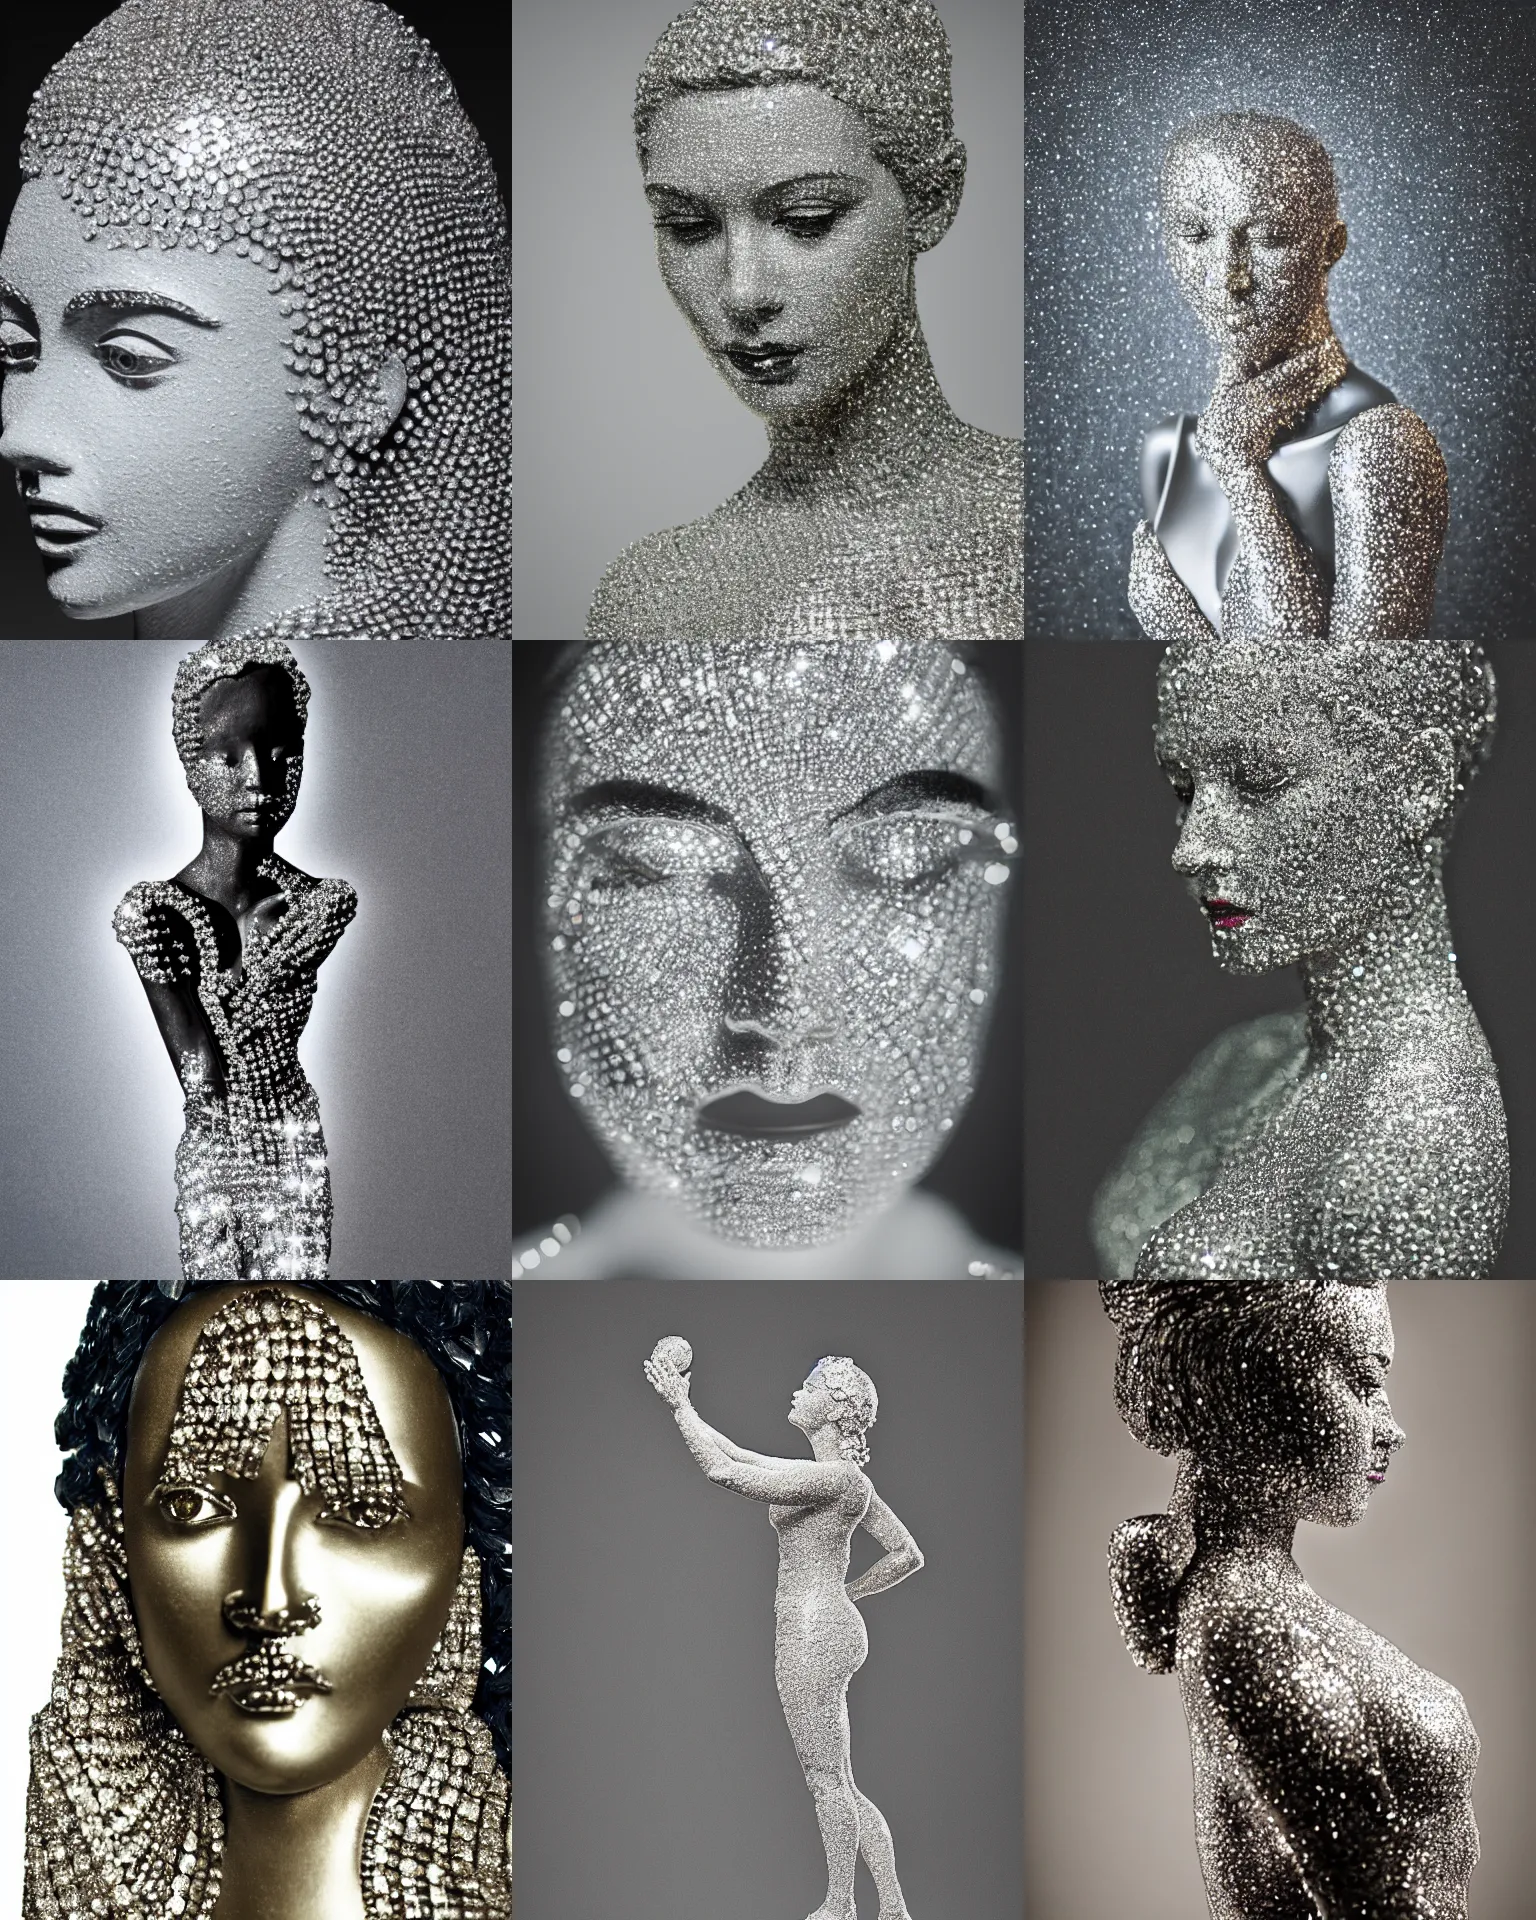 Prompt: female statue made of diamonds, studio light, dark background, glittery, 3 5 mm photography